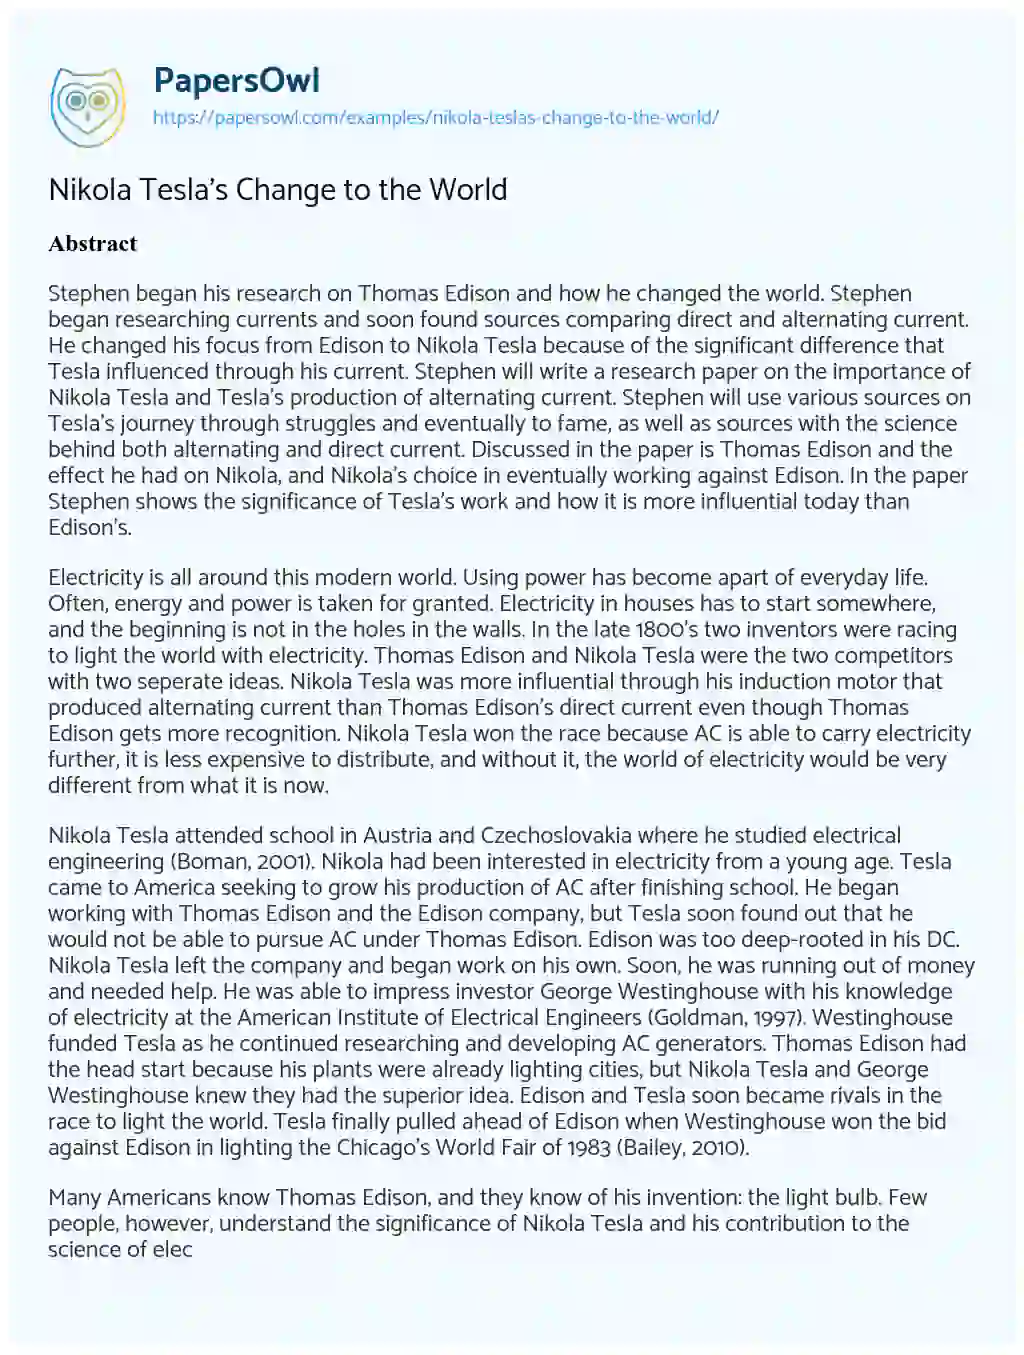 Nikola Tesla’s Change to the World essay